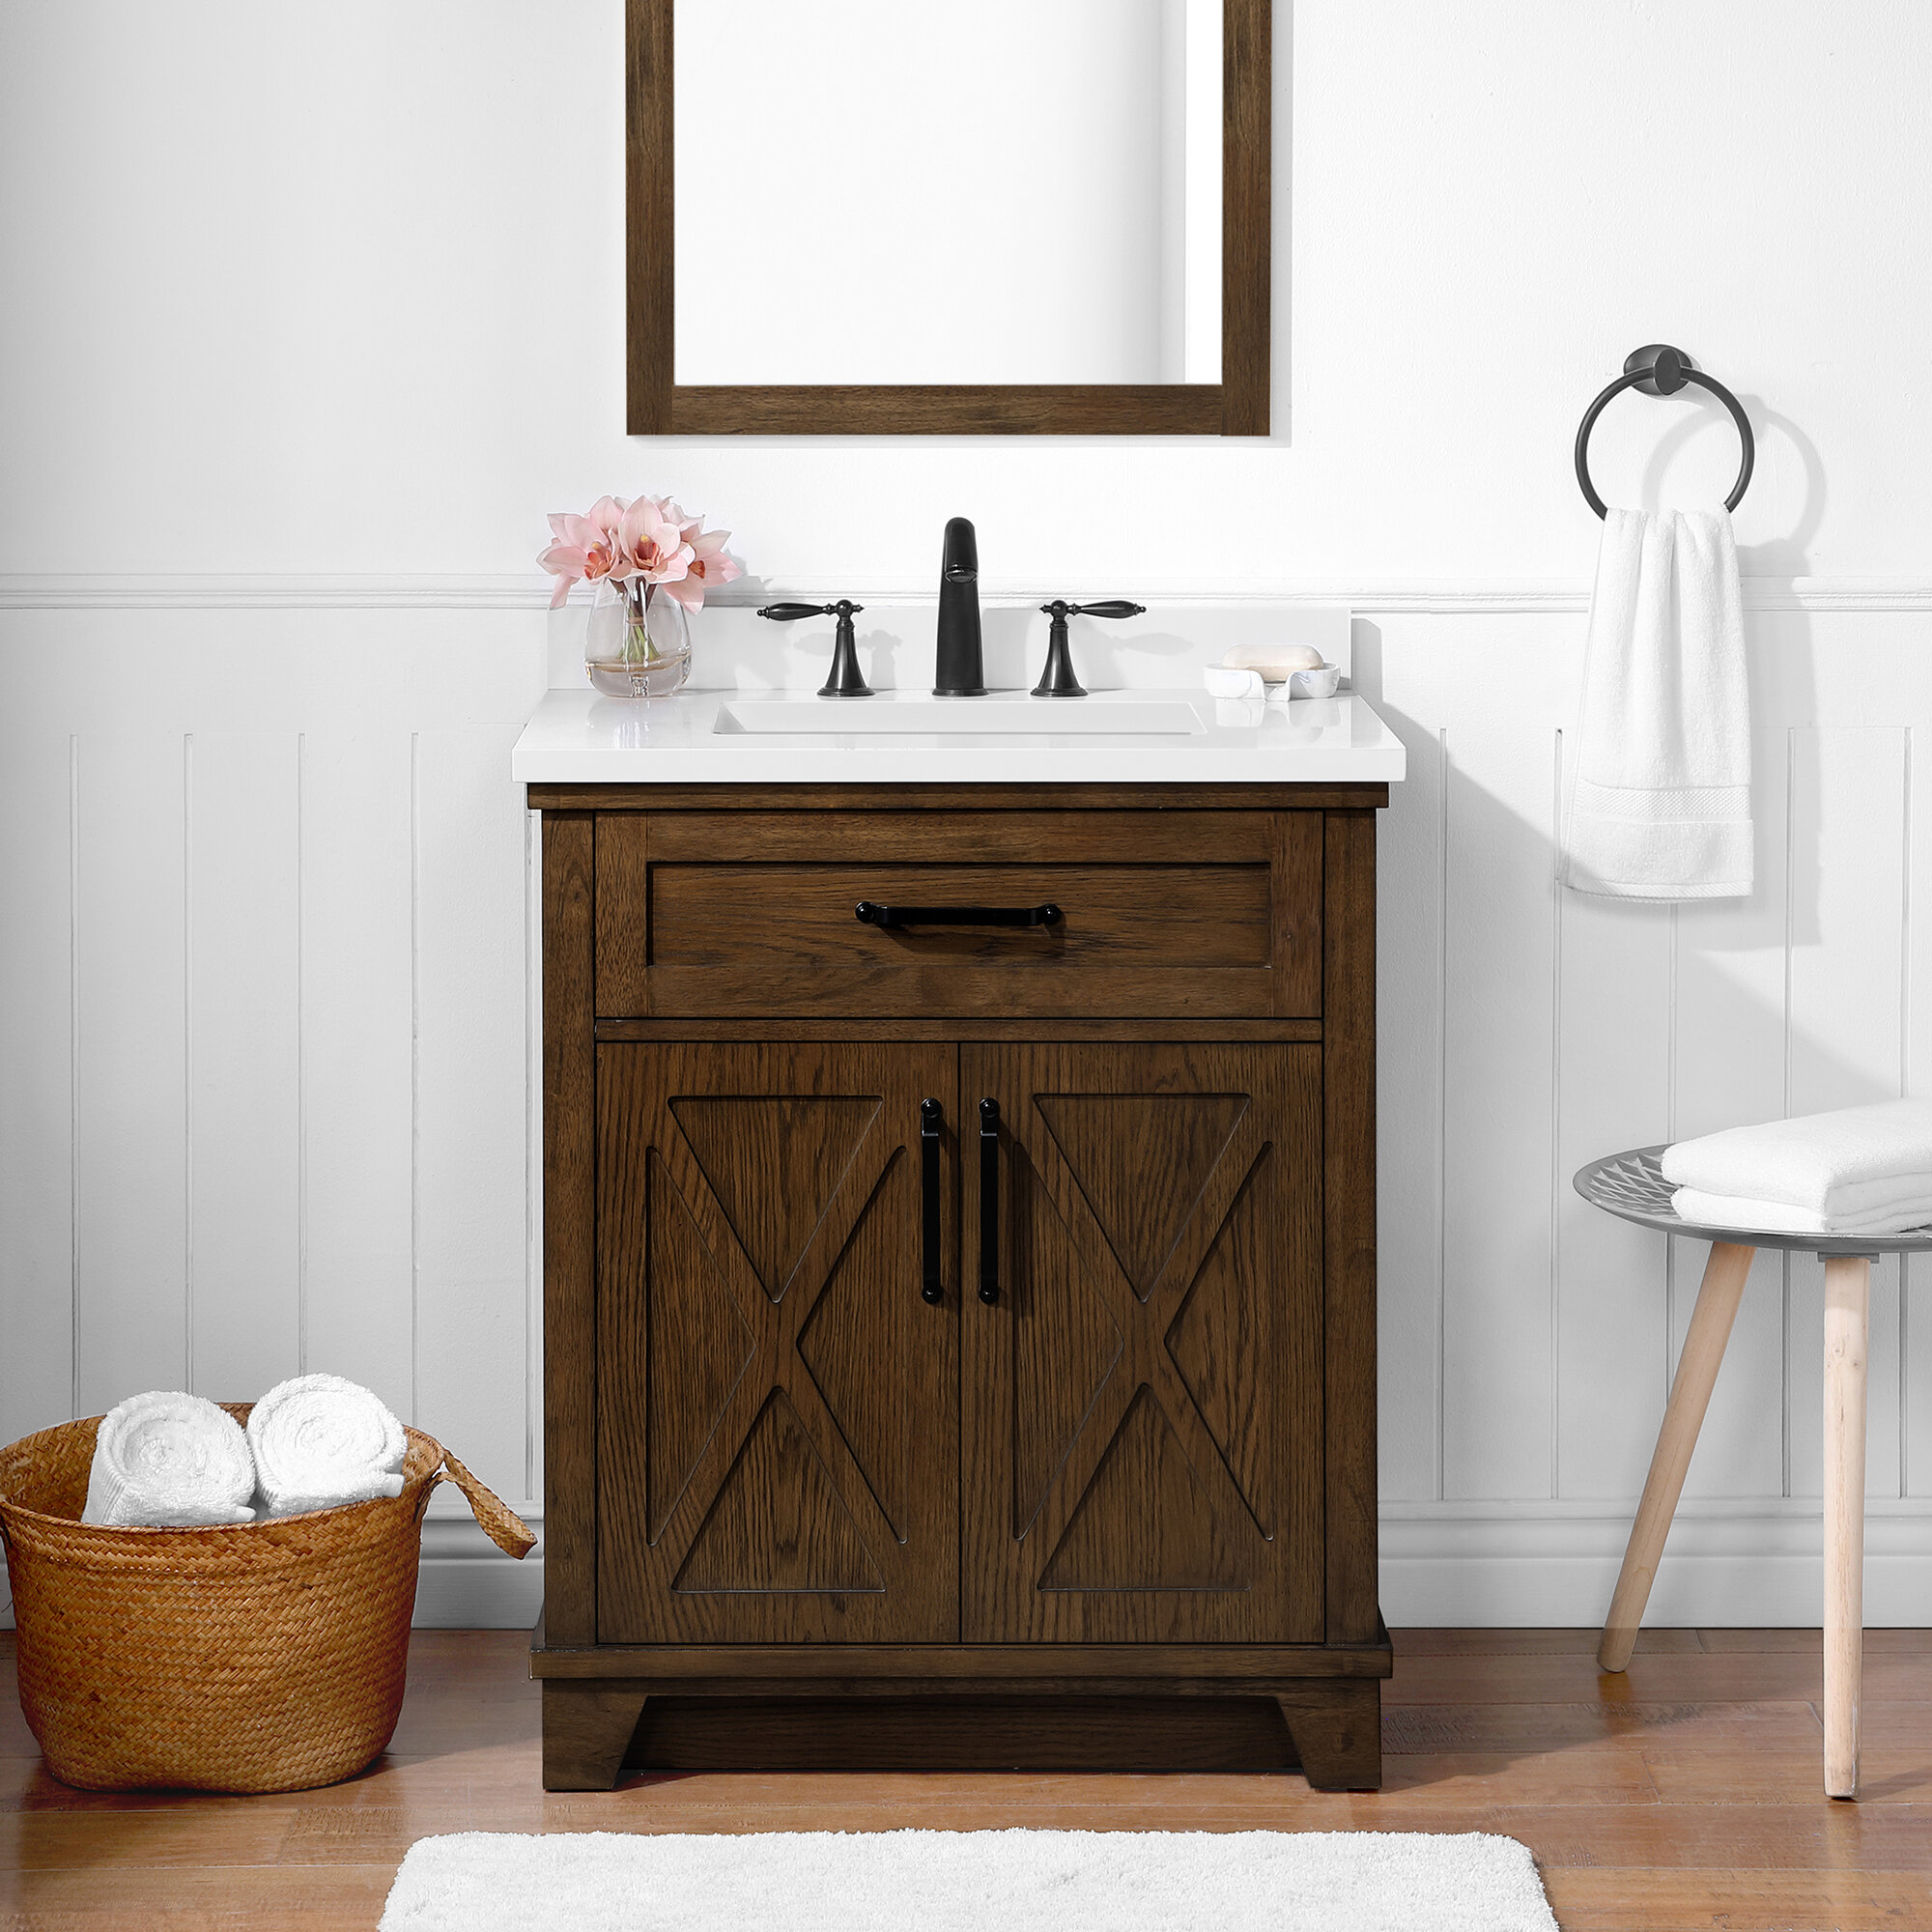 Ove Decors Ollie 30 In Single Sink Bathroom Vanity In Antique Coffee Finish Wayfair